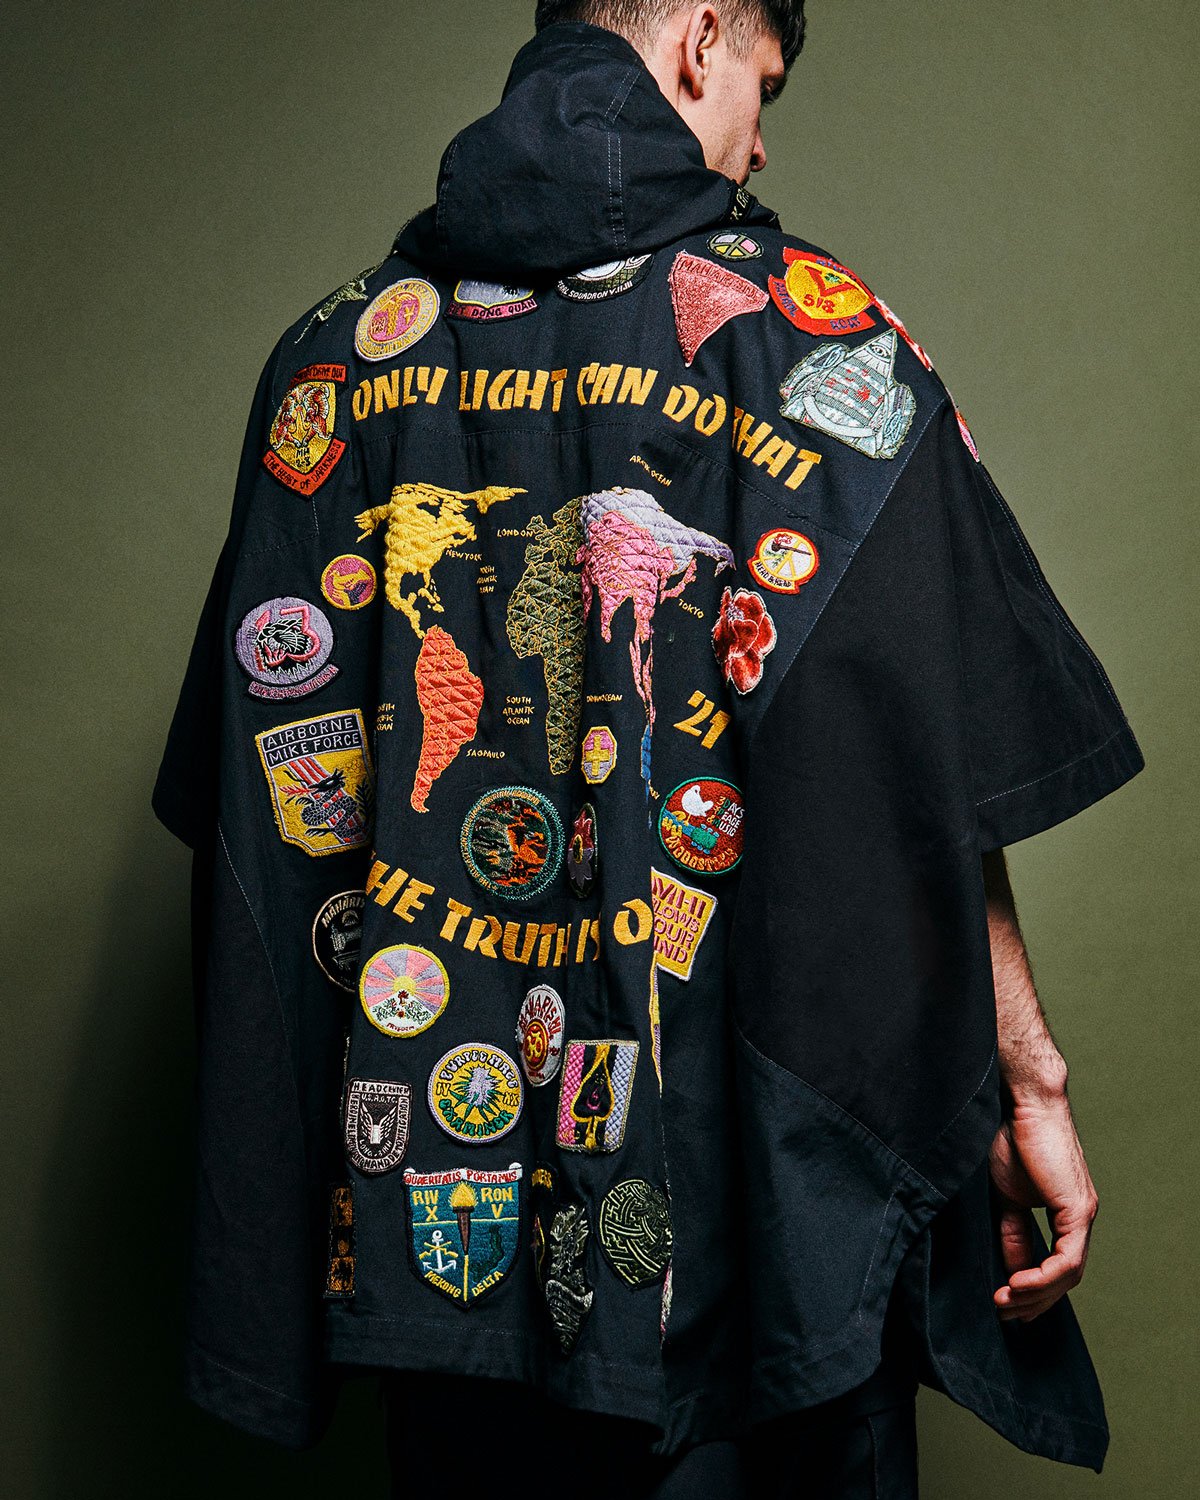 Maharishi Mike Force Camouflage Shirt Jacket for Men